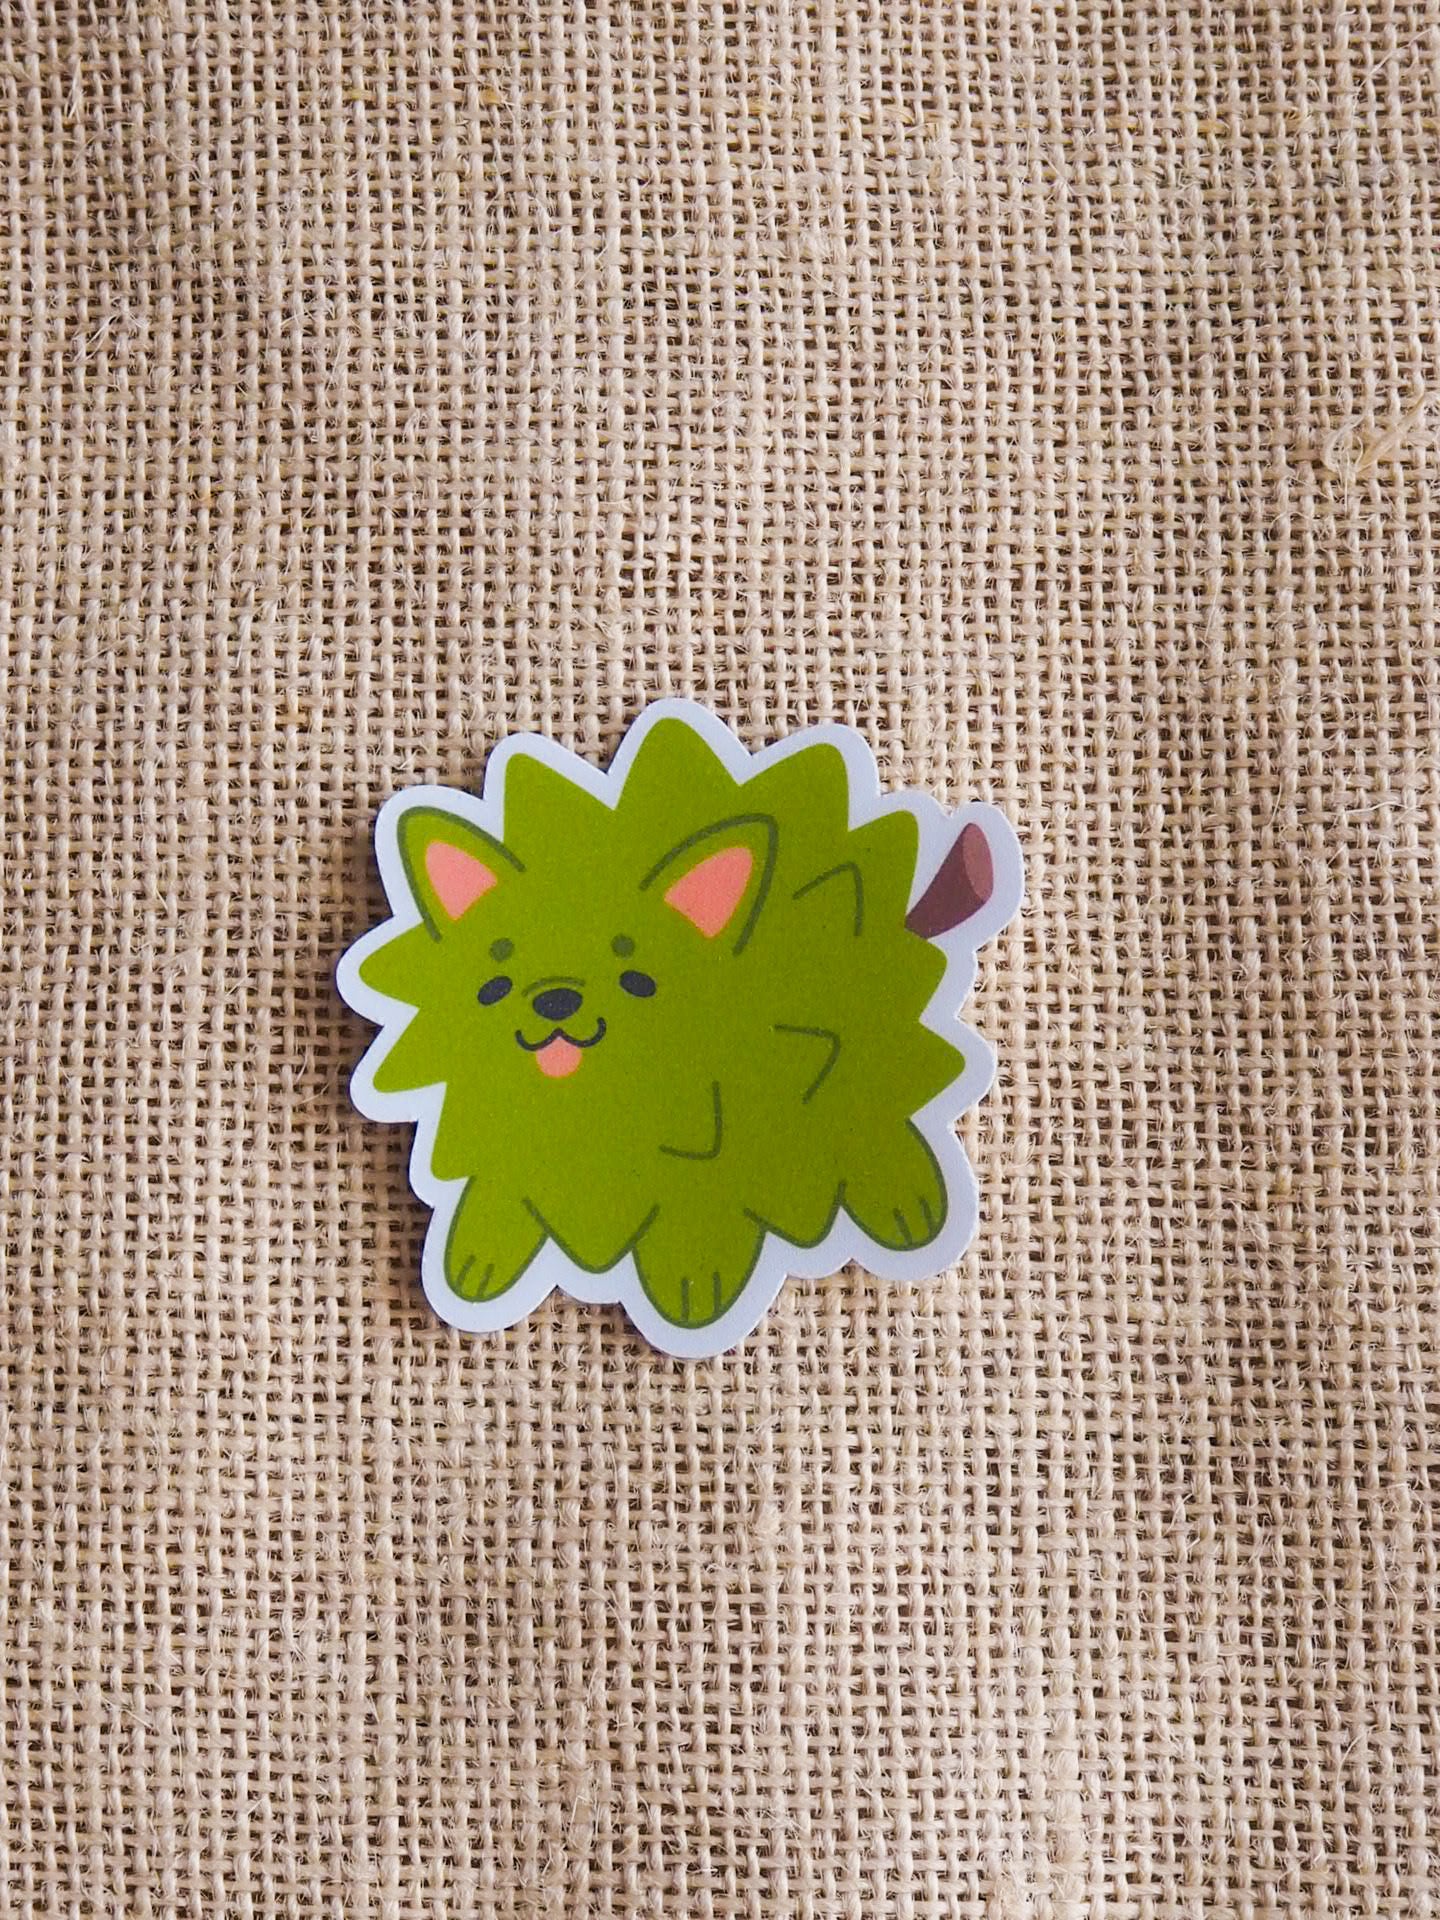 Fruit Dogs (Durian) Sticker